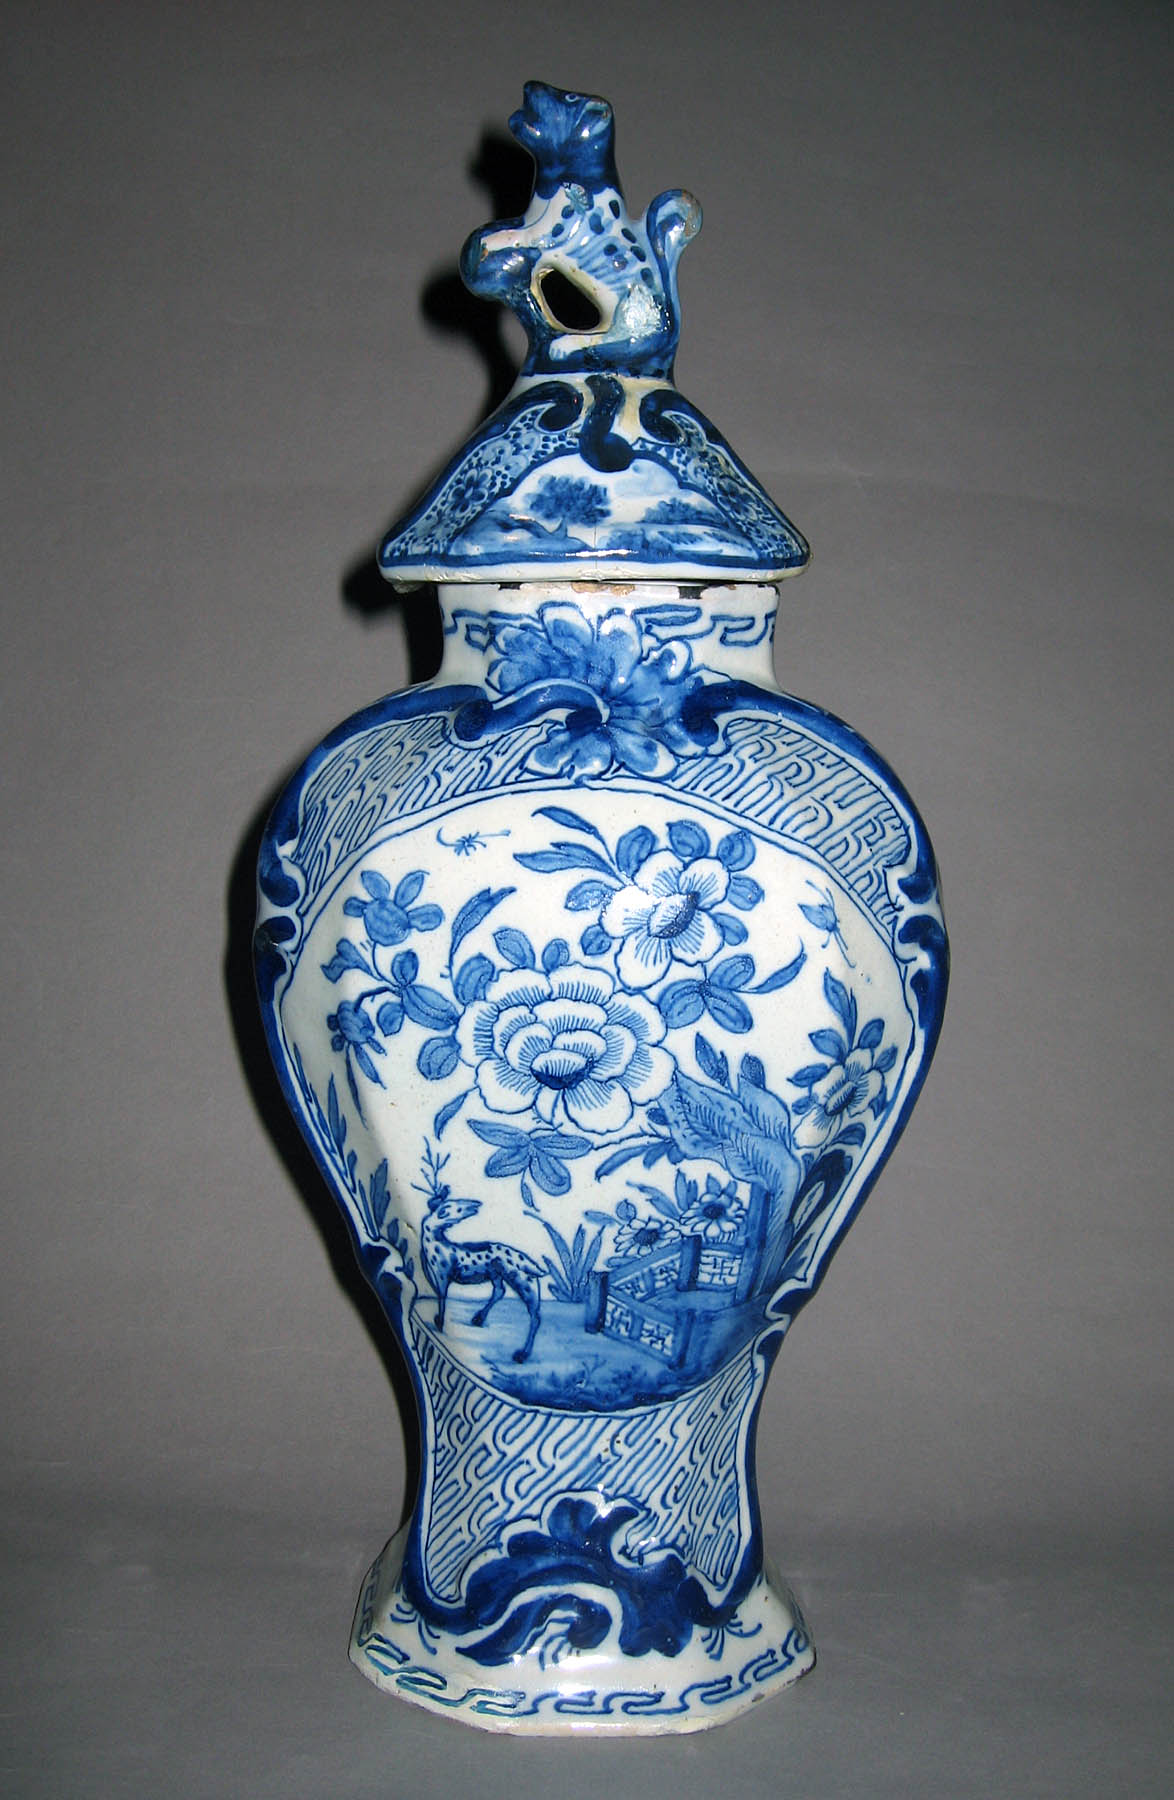 1960.0084.005 A, B Delft covered vase